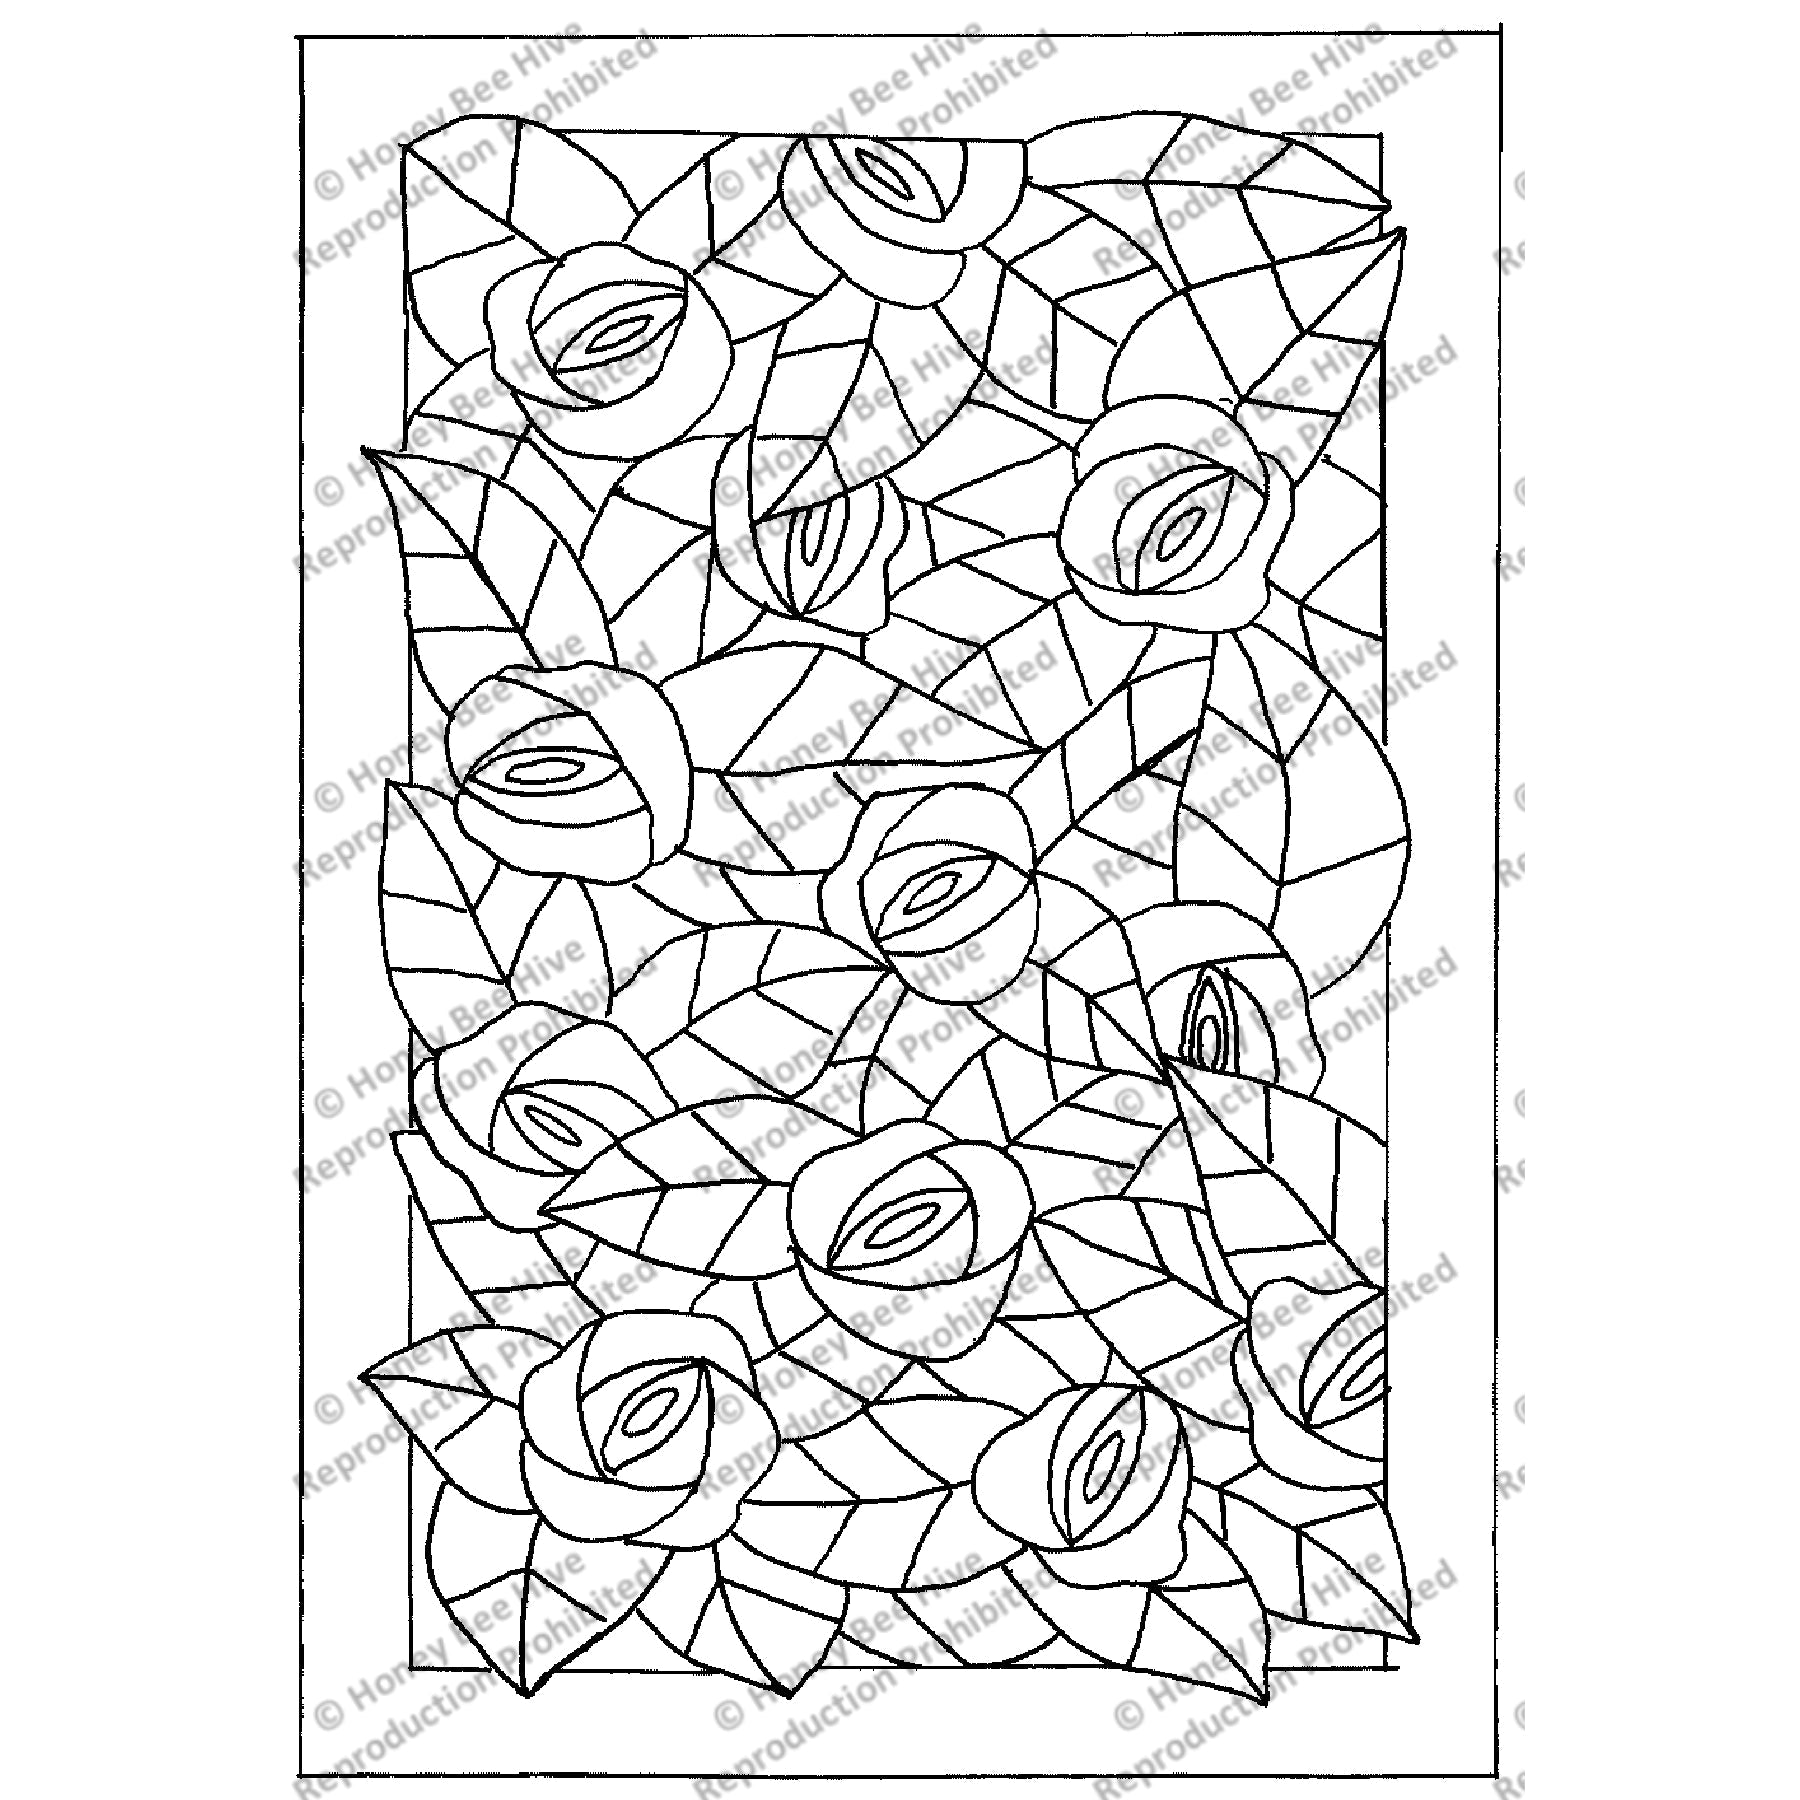 A Dozen Roses, rug hooking pattern